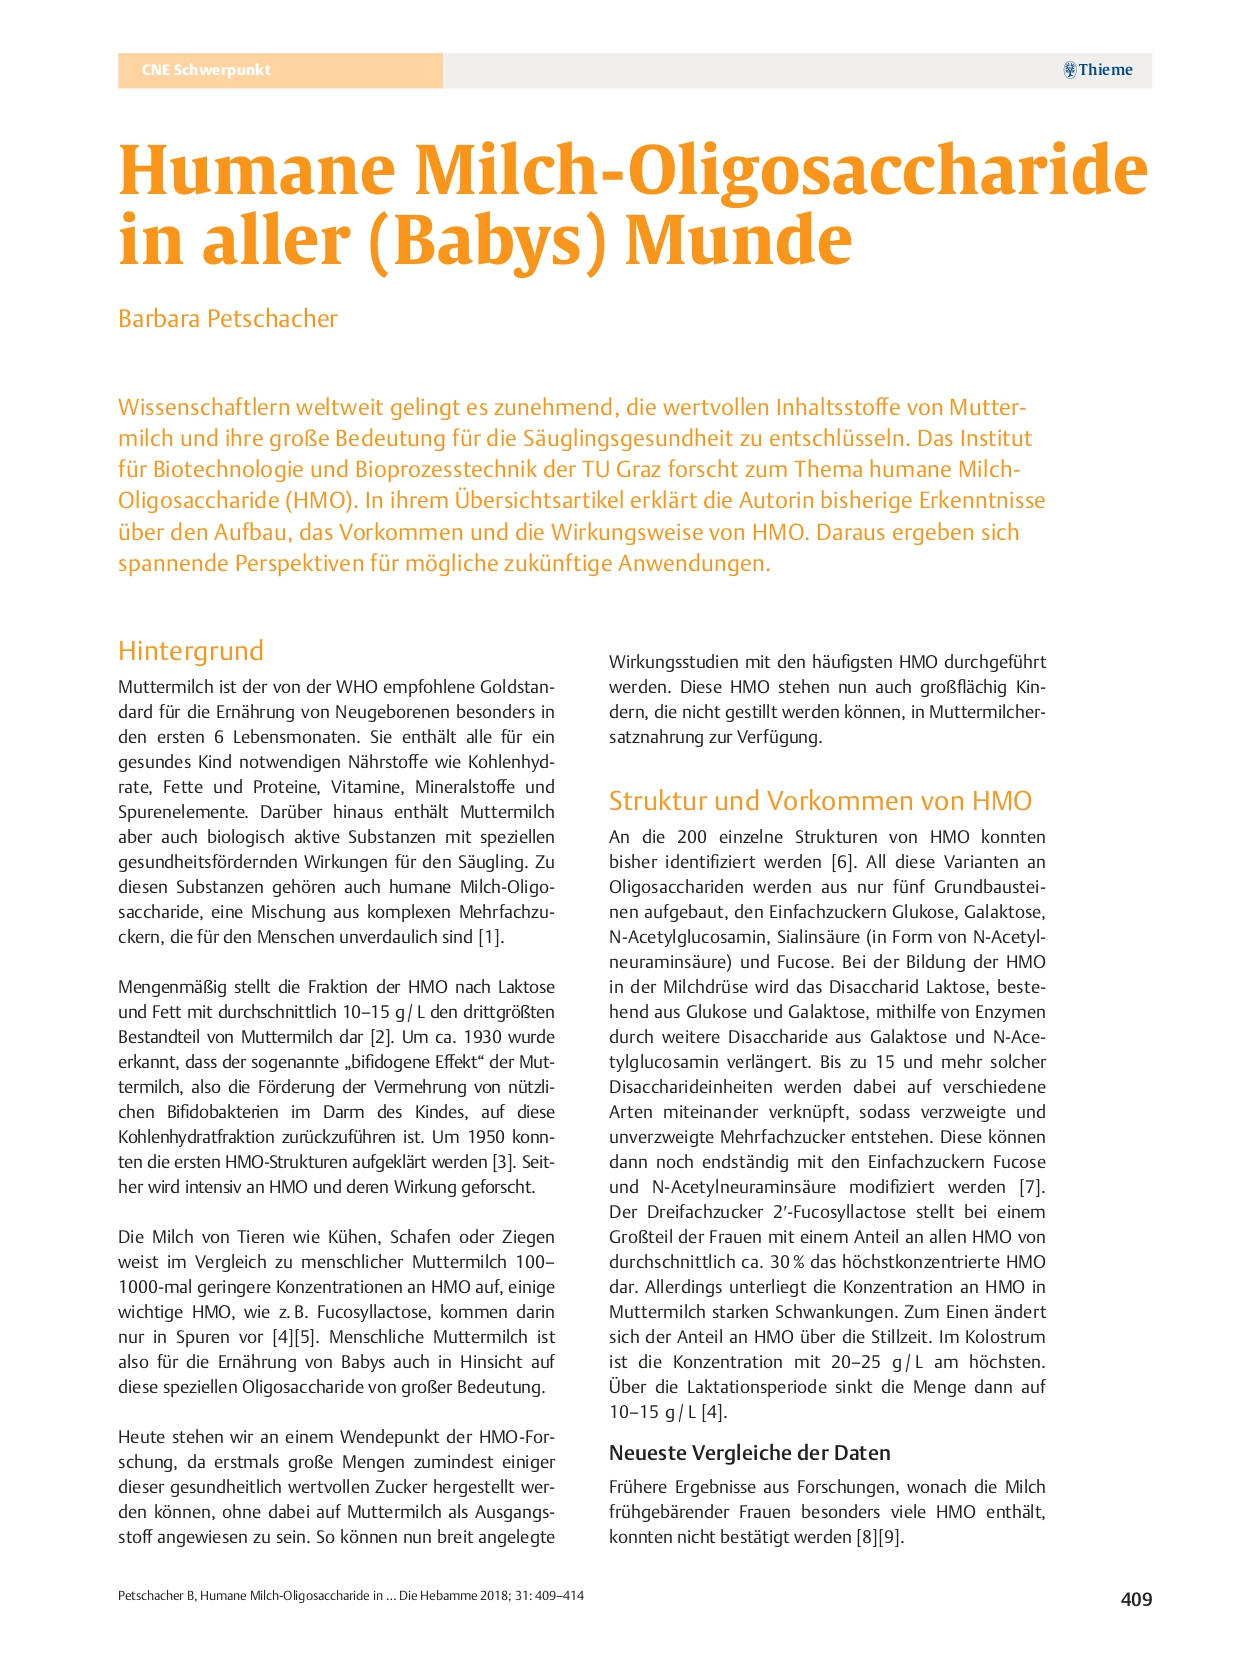 Humane Milch-Oligosaccharide in aller (Baby) Munde